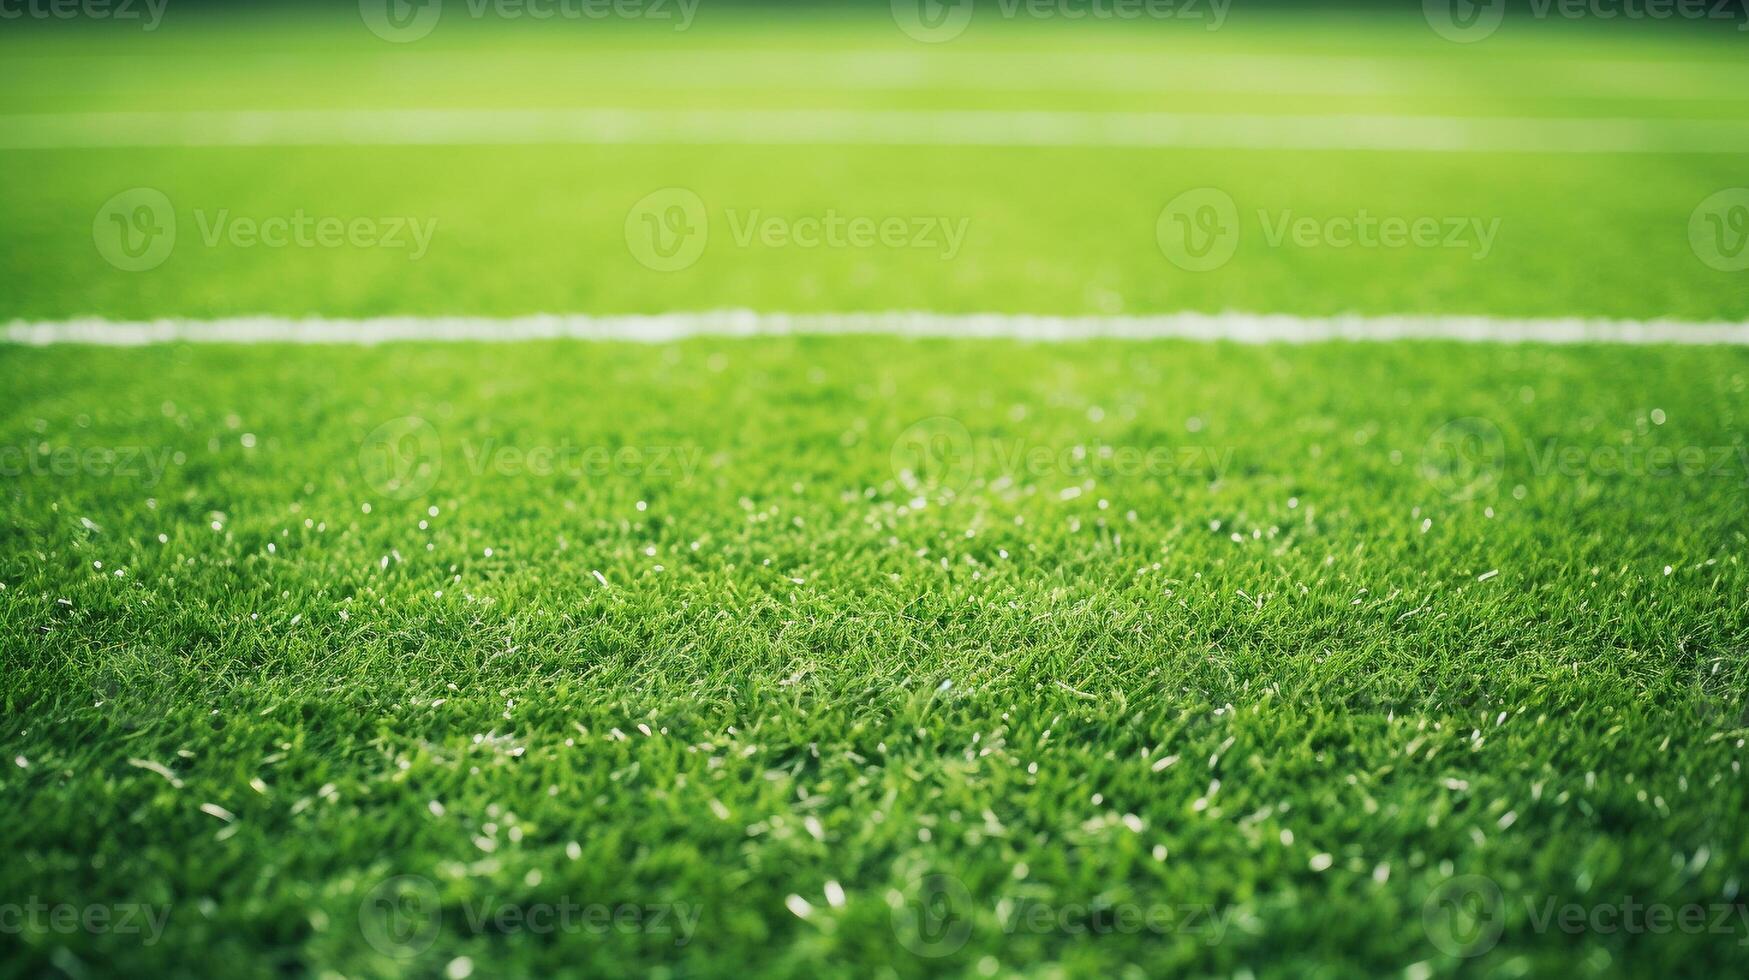 AI generated green grass football field close up photo